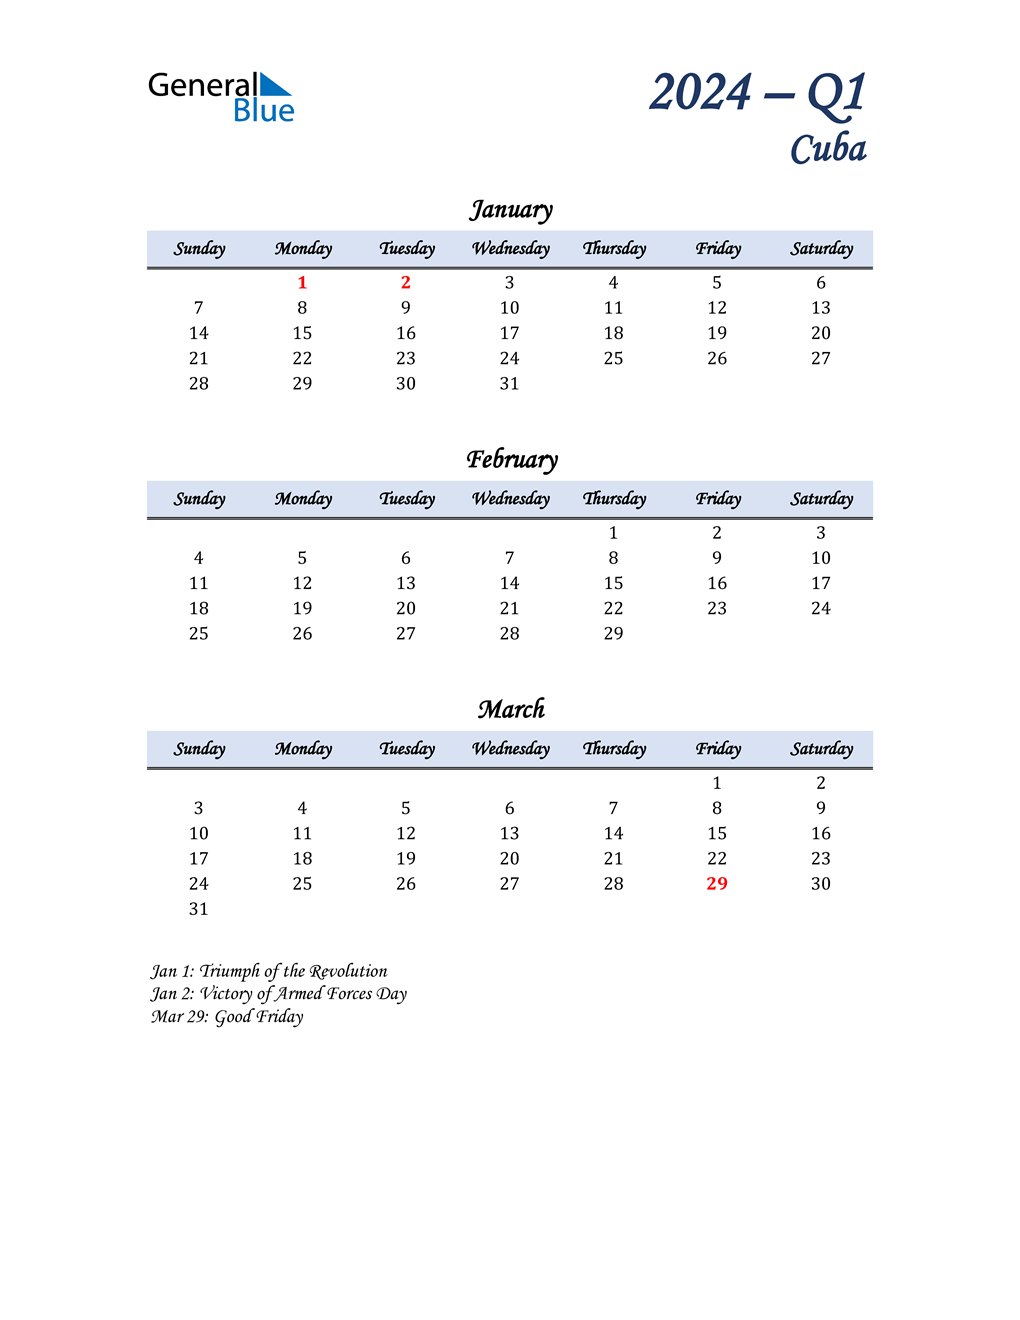  January, February, and March Calendar for Cuba